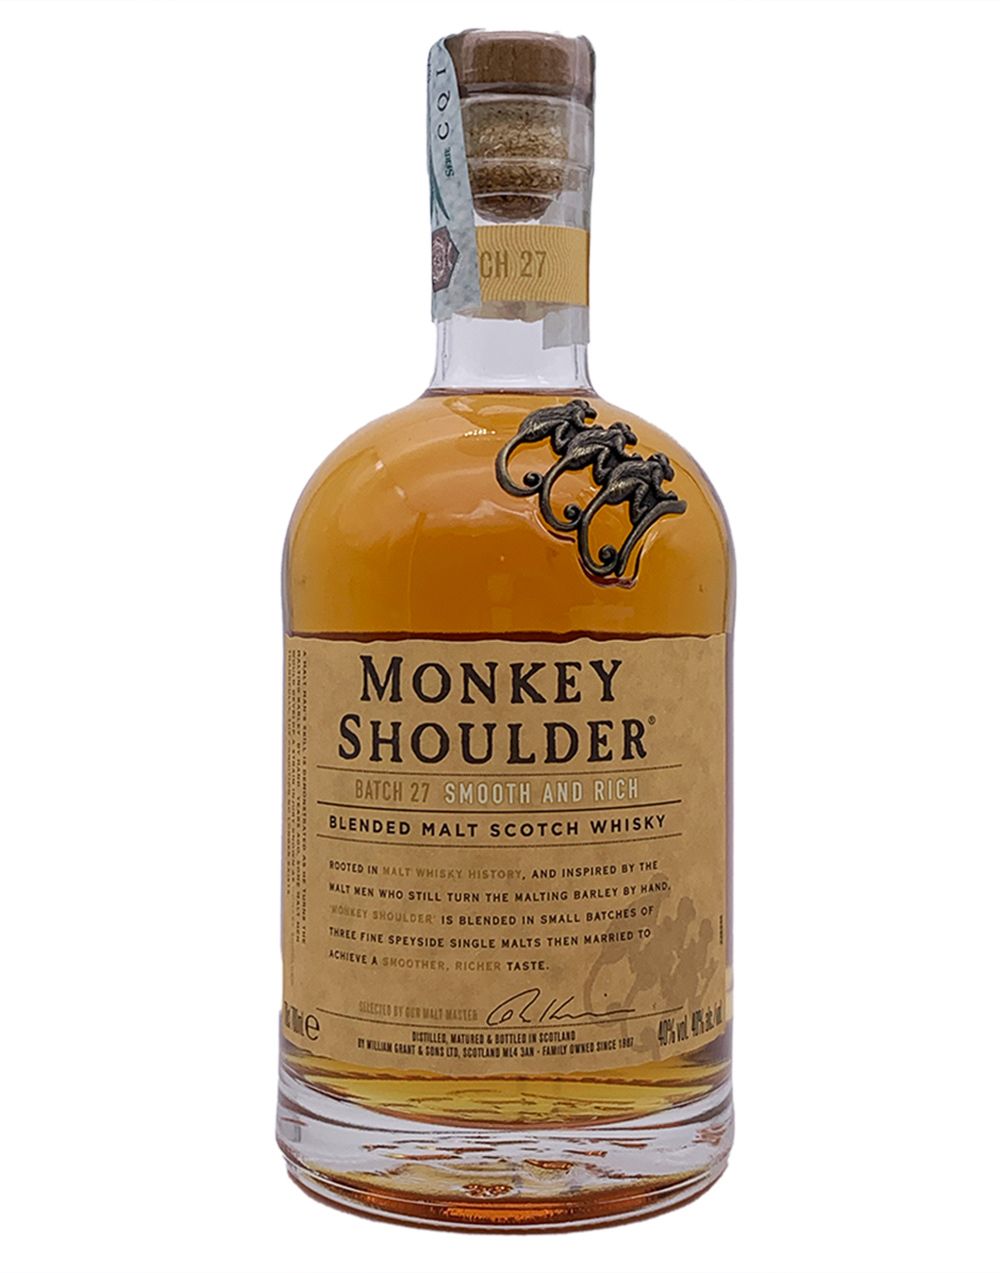 Манки шолдер 0.7. Манки Шолдерс. Monkey Shoulder стакан. Манки шолдер дымные. Monkey Shoulder batch 27 маленькие бутылочки.